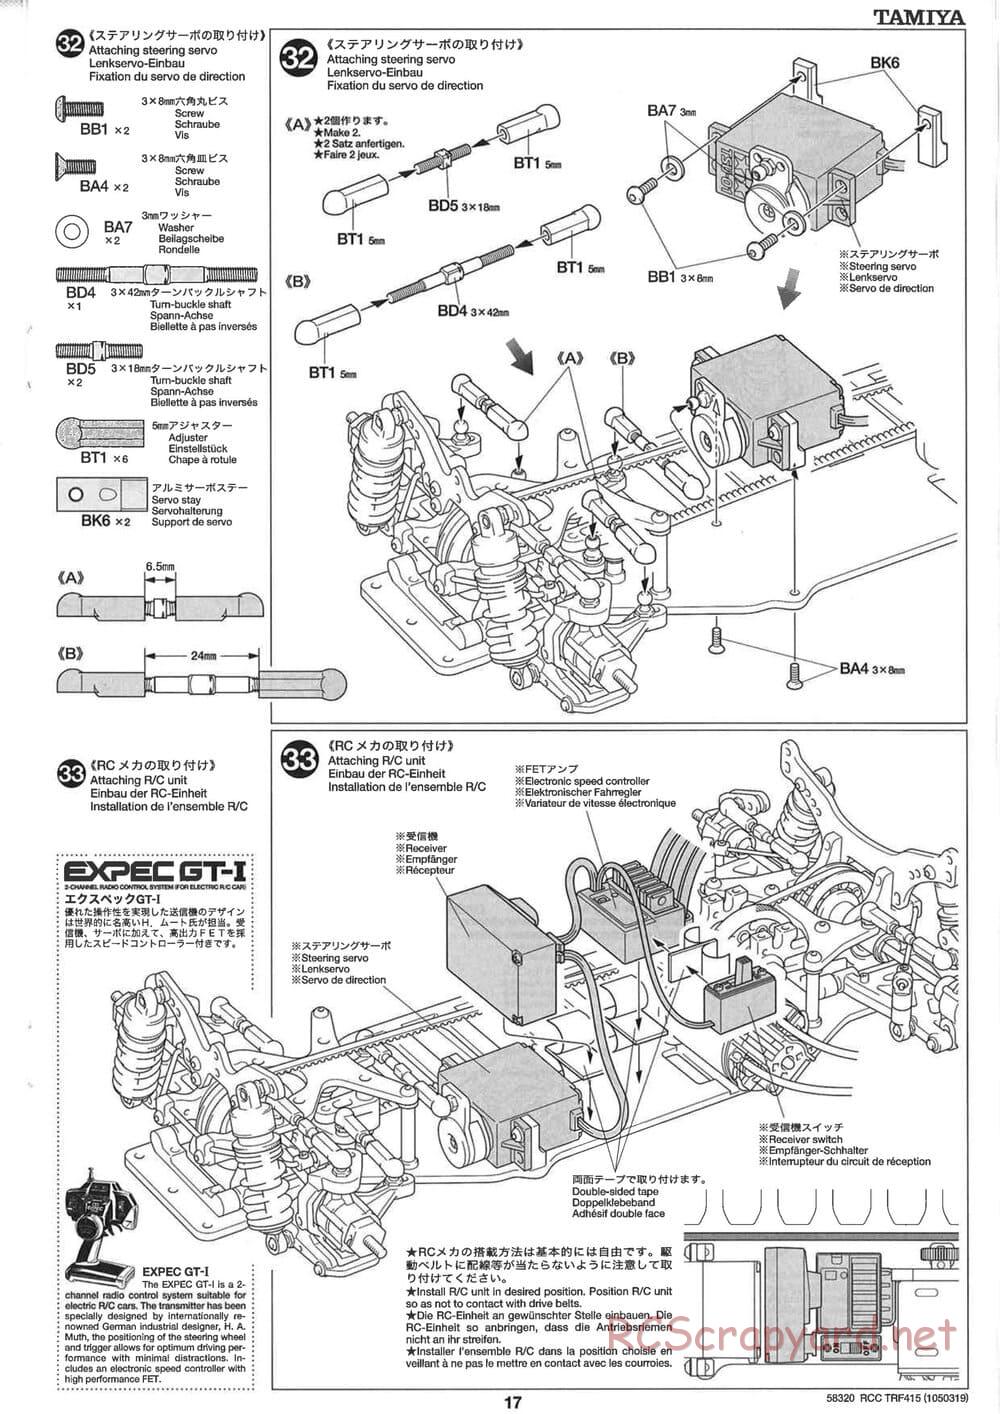 Tamiya - TRF415 Chassis - Manual - Page 17